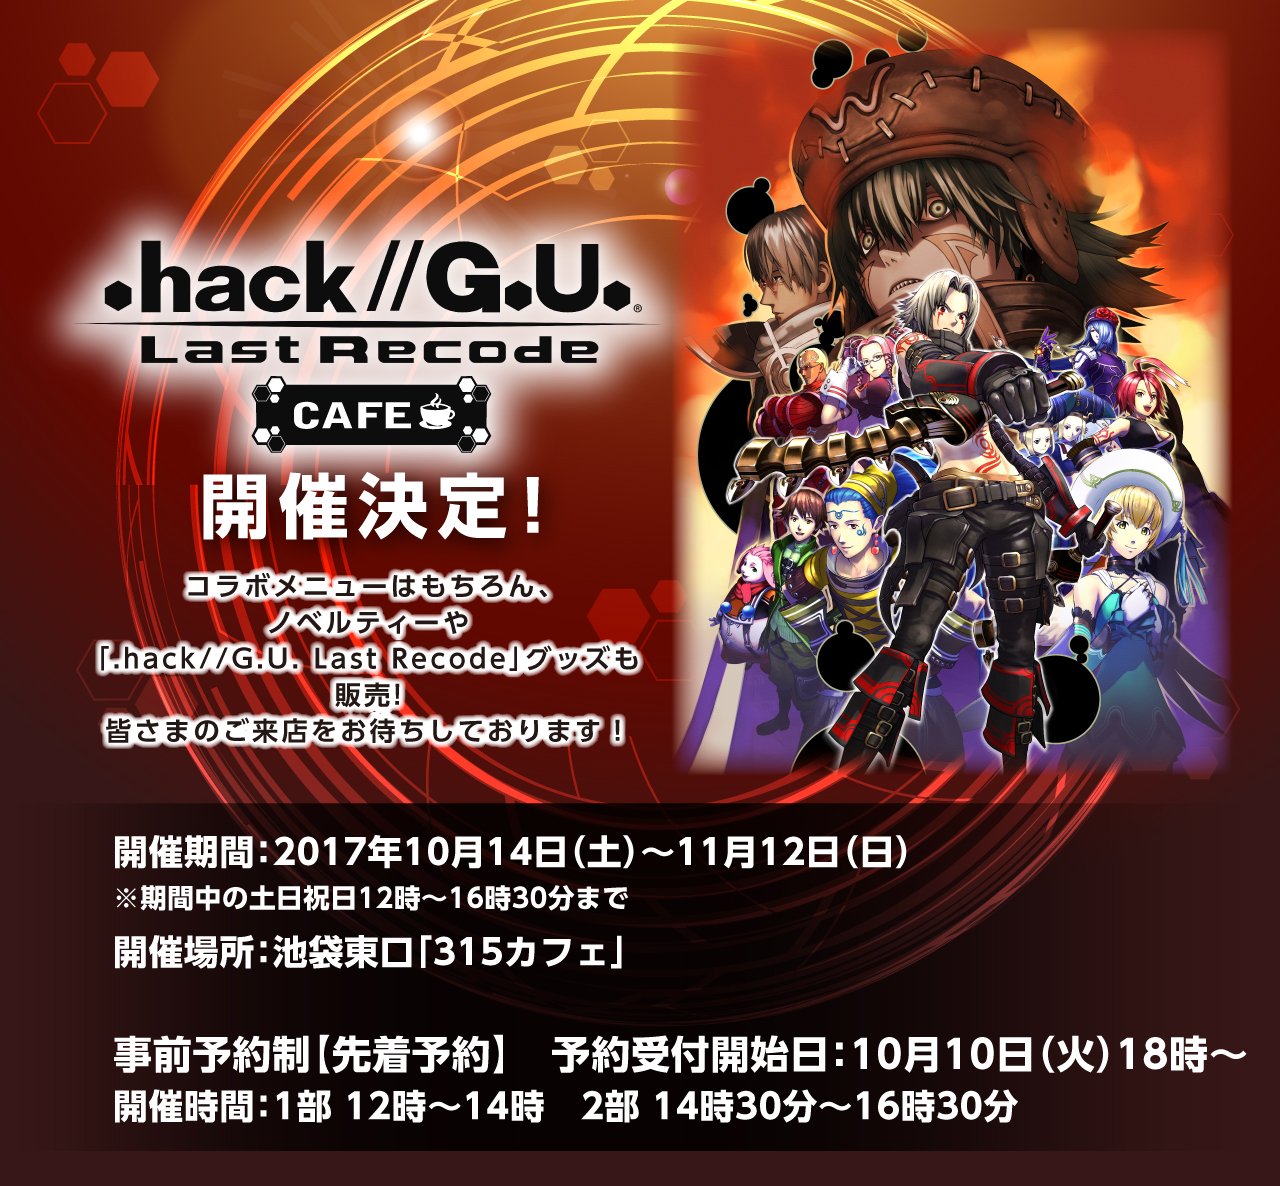 .hack//G.U. Last Recode Cafe Promo